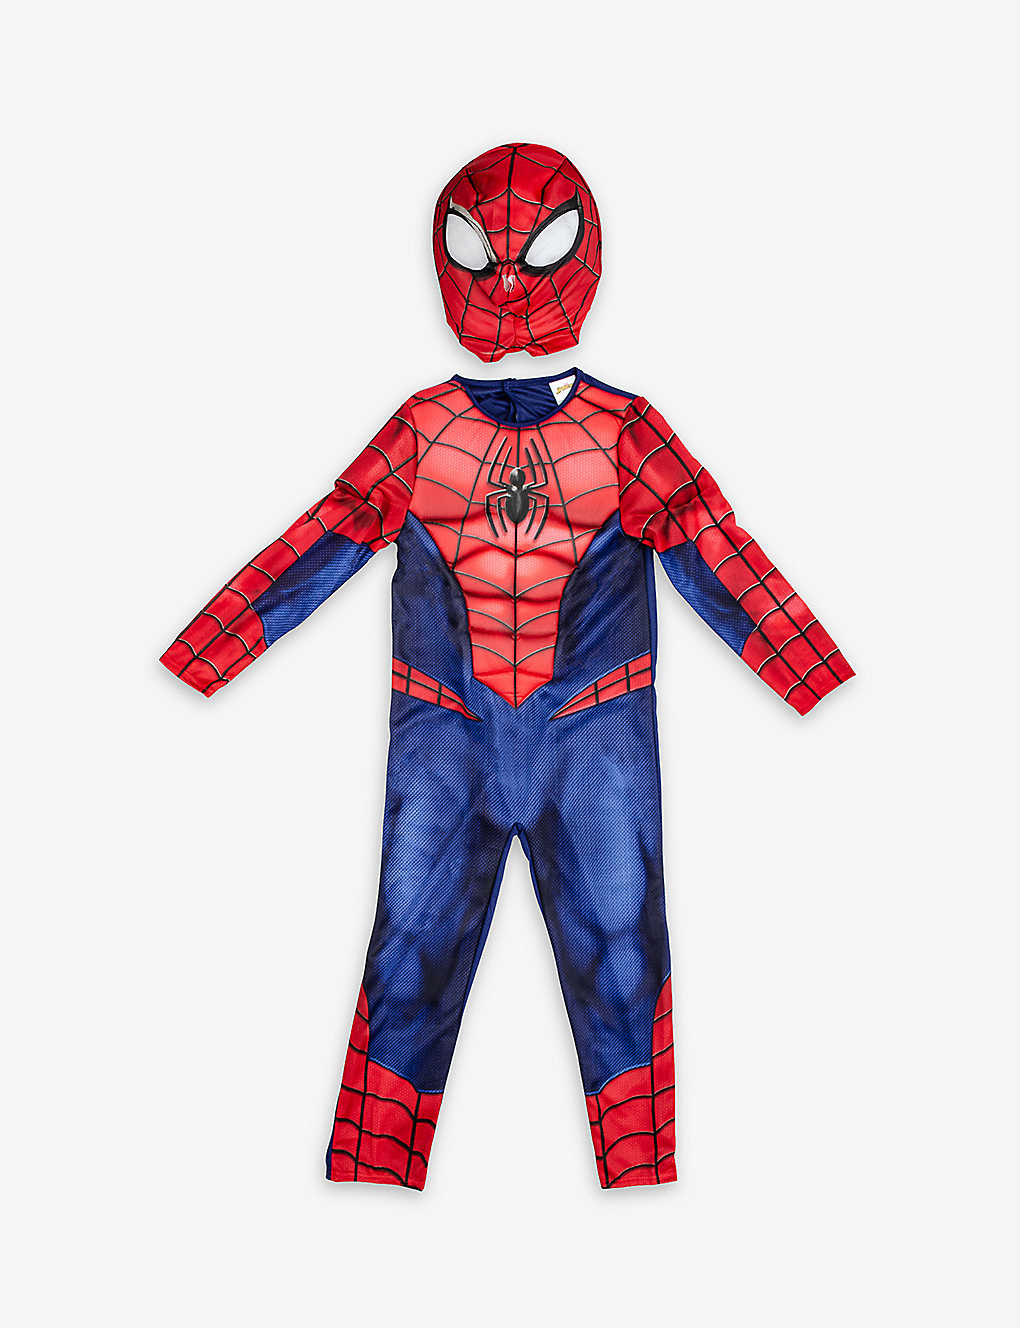 Spiderman Costume Boys Kids Light up Spider Size S M Free MASK 4 5 6 7 8 9 